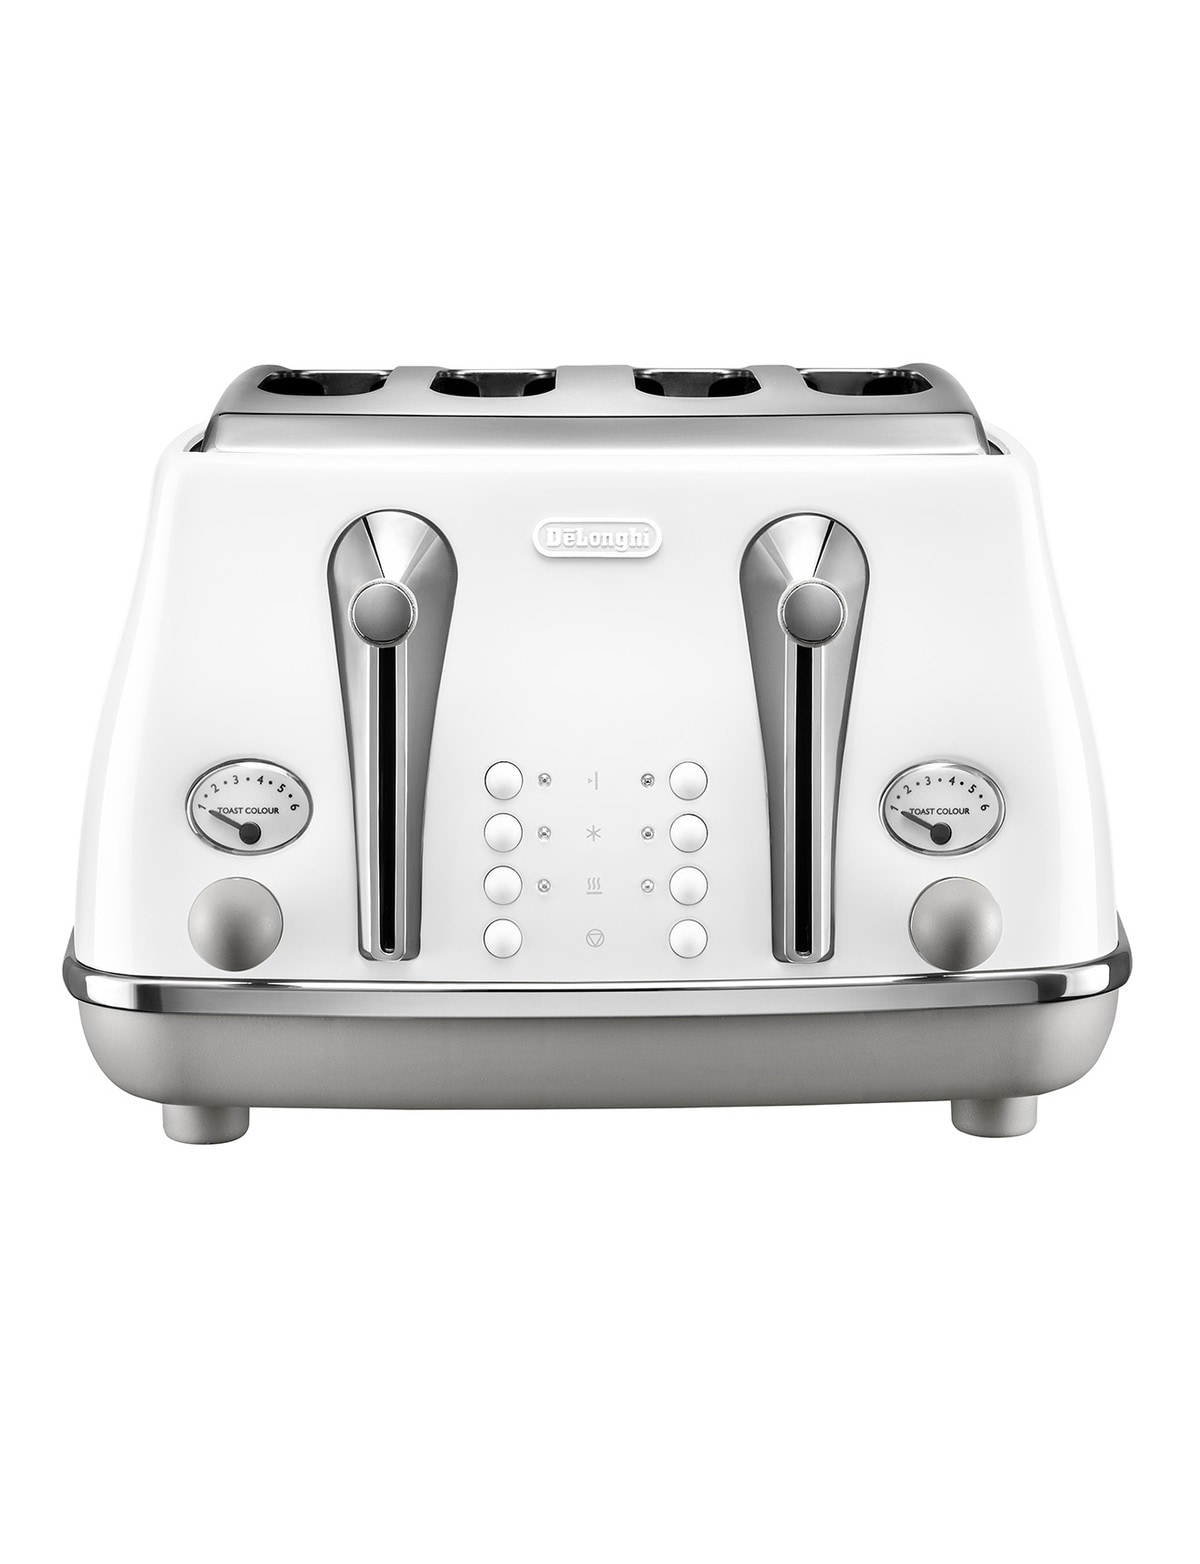 DeLonghi Icona Capitals 4 Slice Toaster, White, CTOC4003W - Toasters